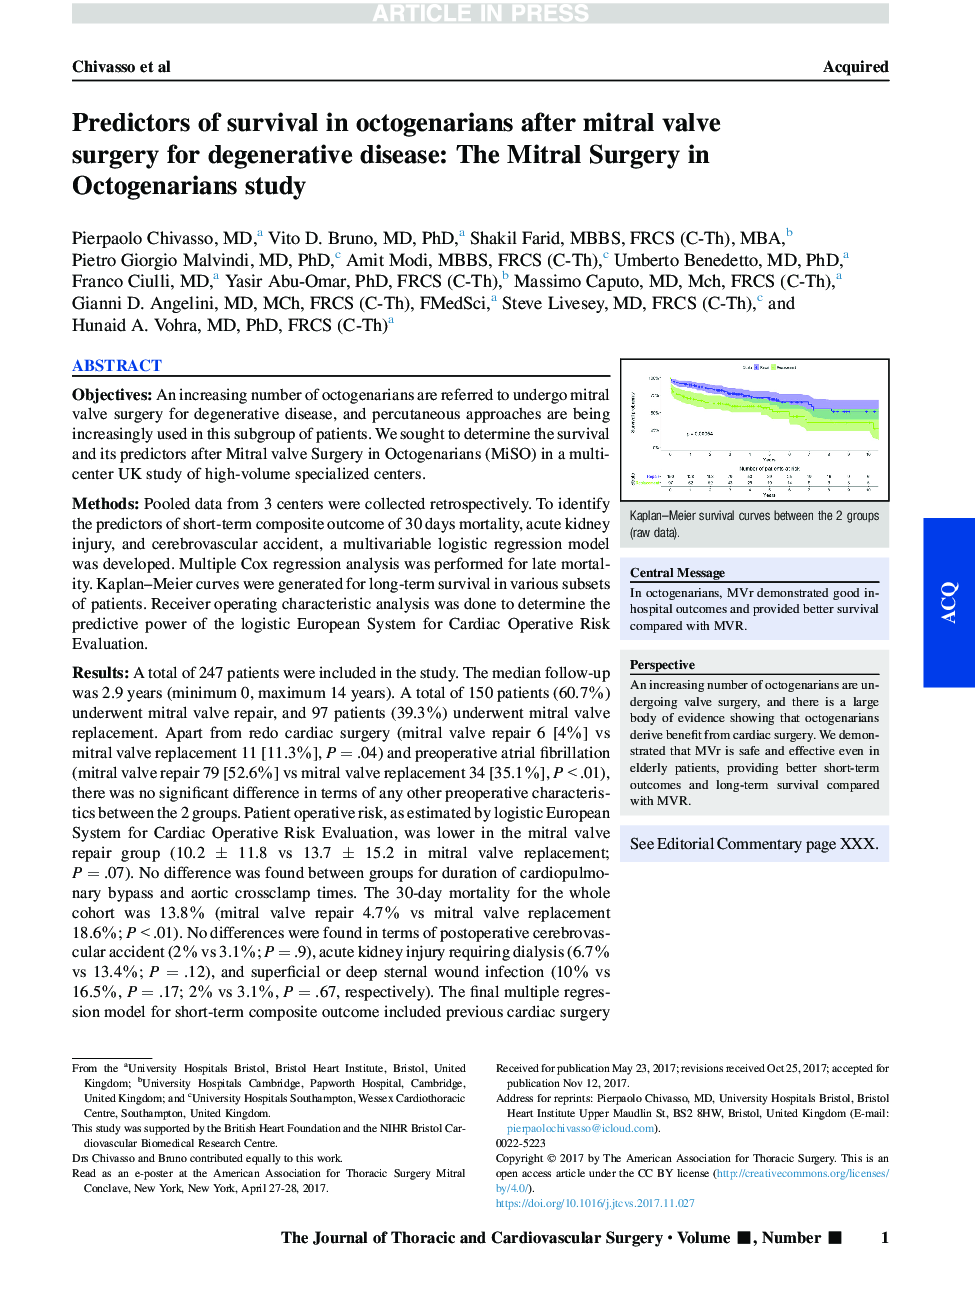 Predictors of survival in octogenarians after mitral valve surgery for degenerative disease: The Mitral Surgery in Octogenarians study